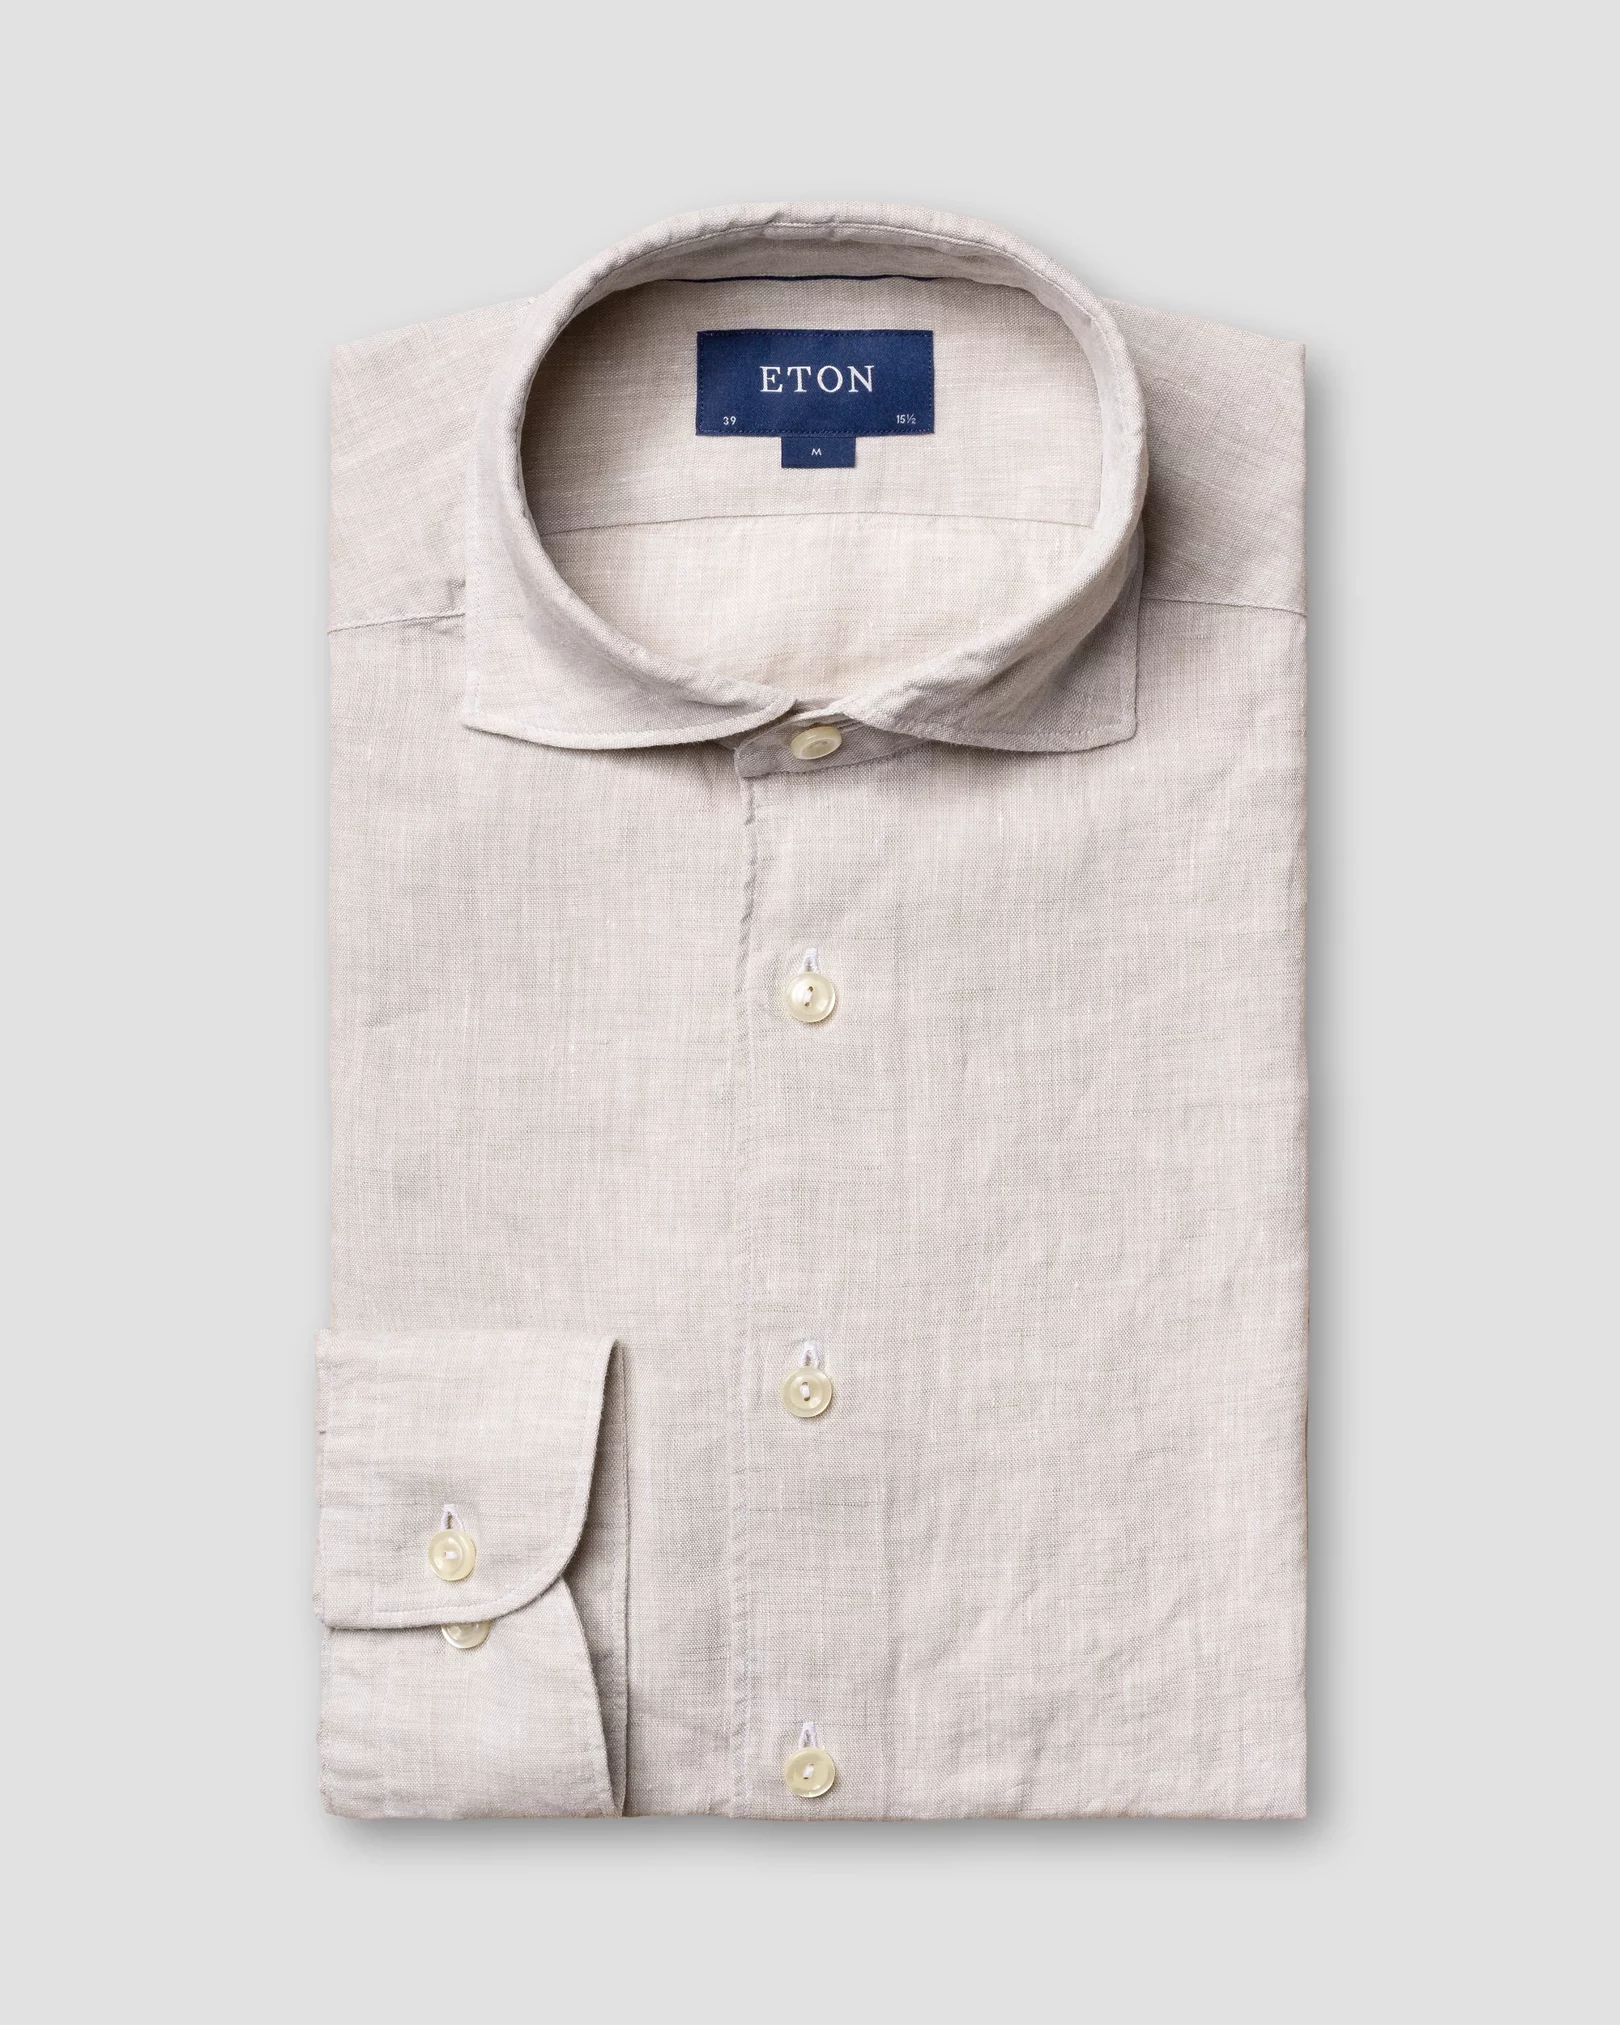 Eton - gray linen shirt